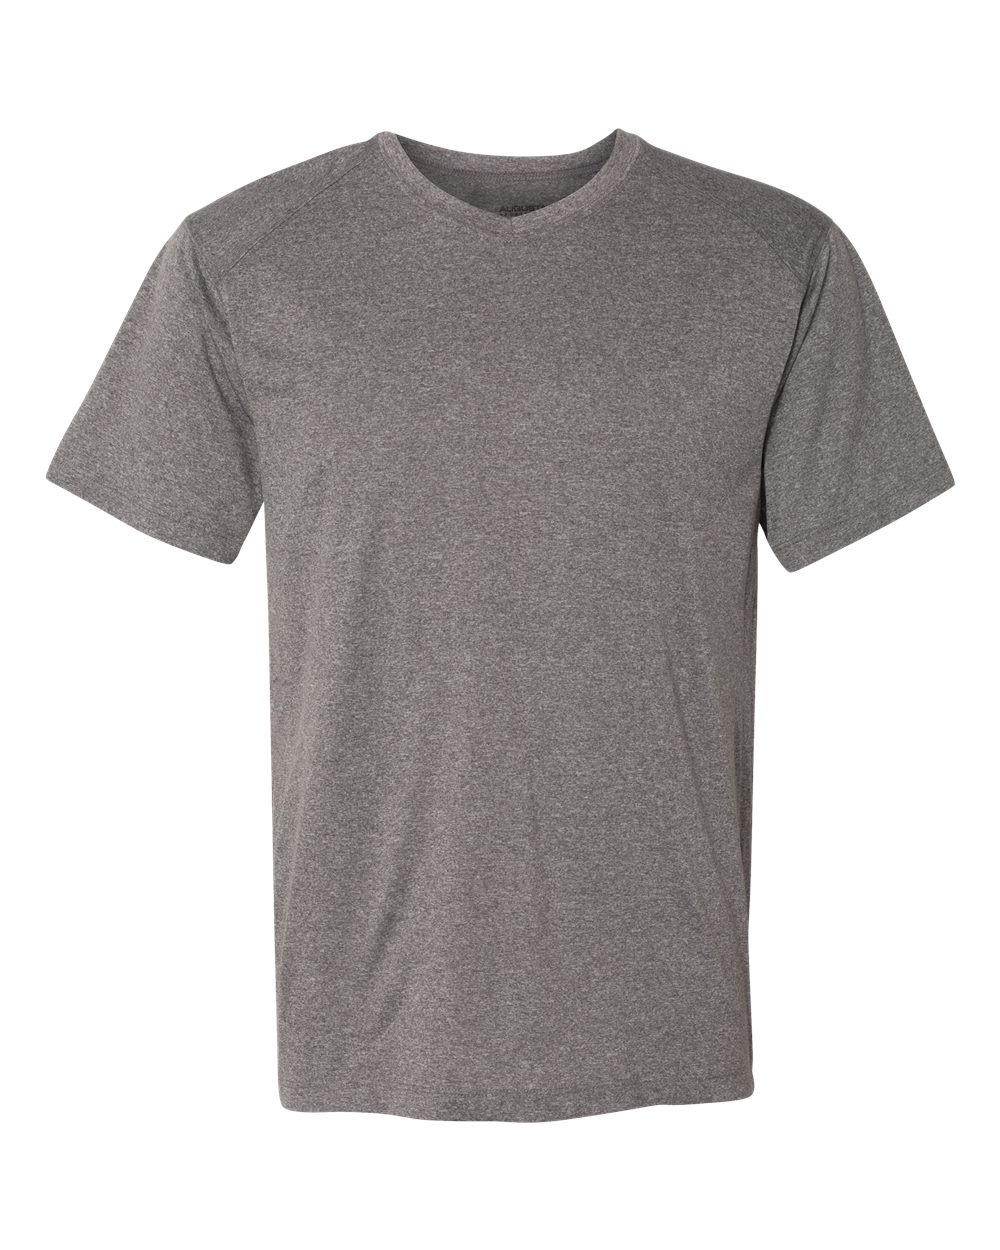 Kinergy Heathered Training T-Shirt-Augusta Sportswear